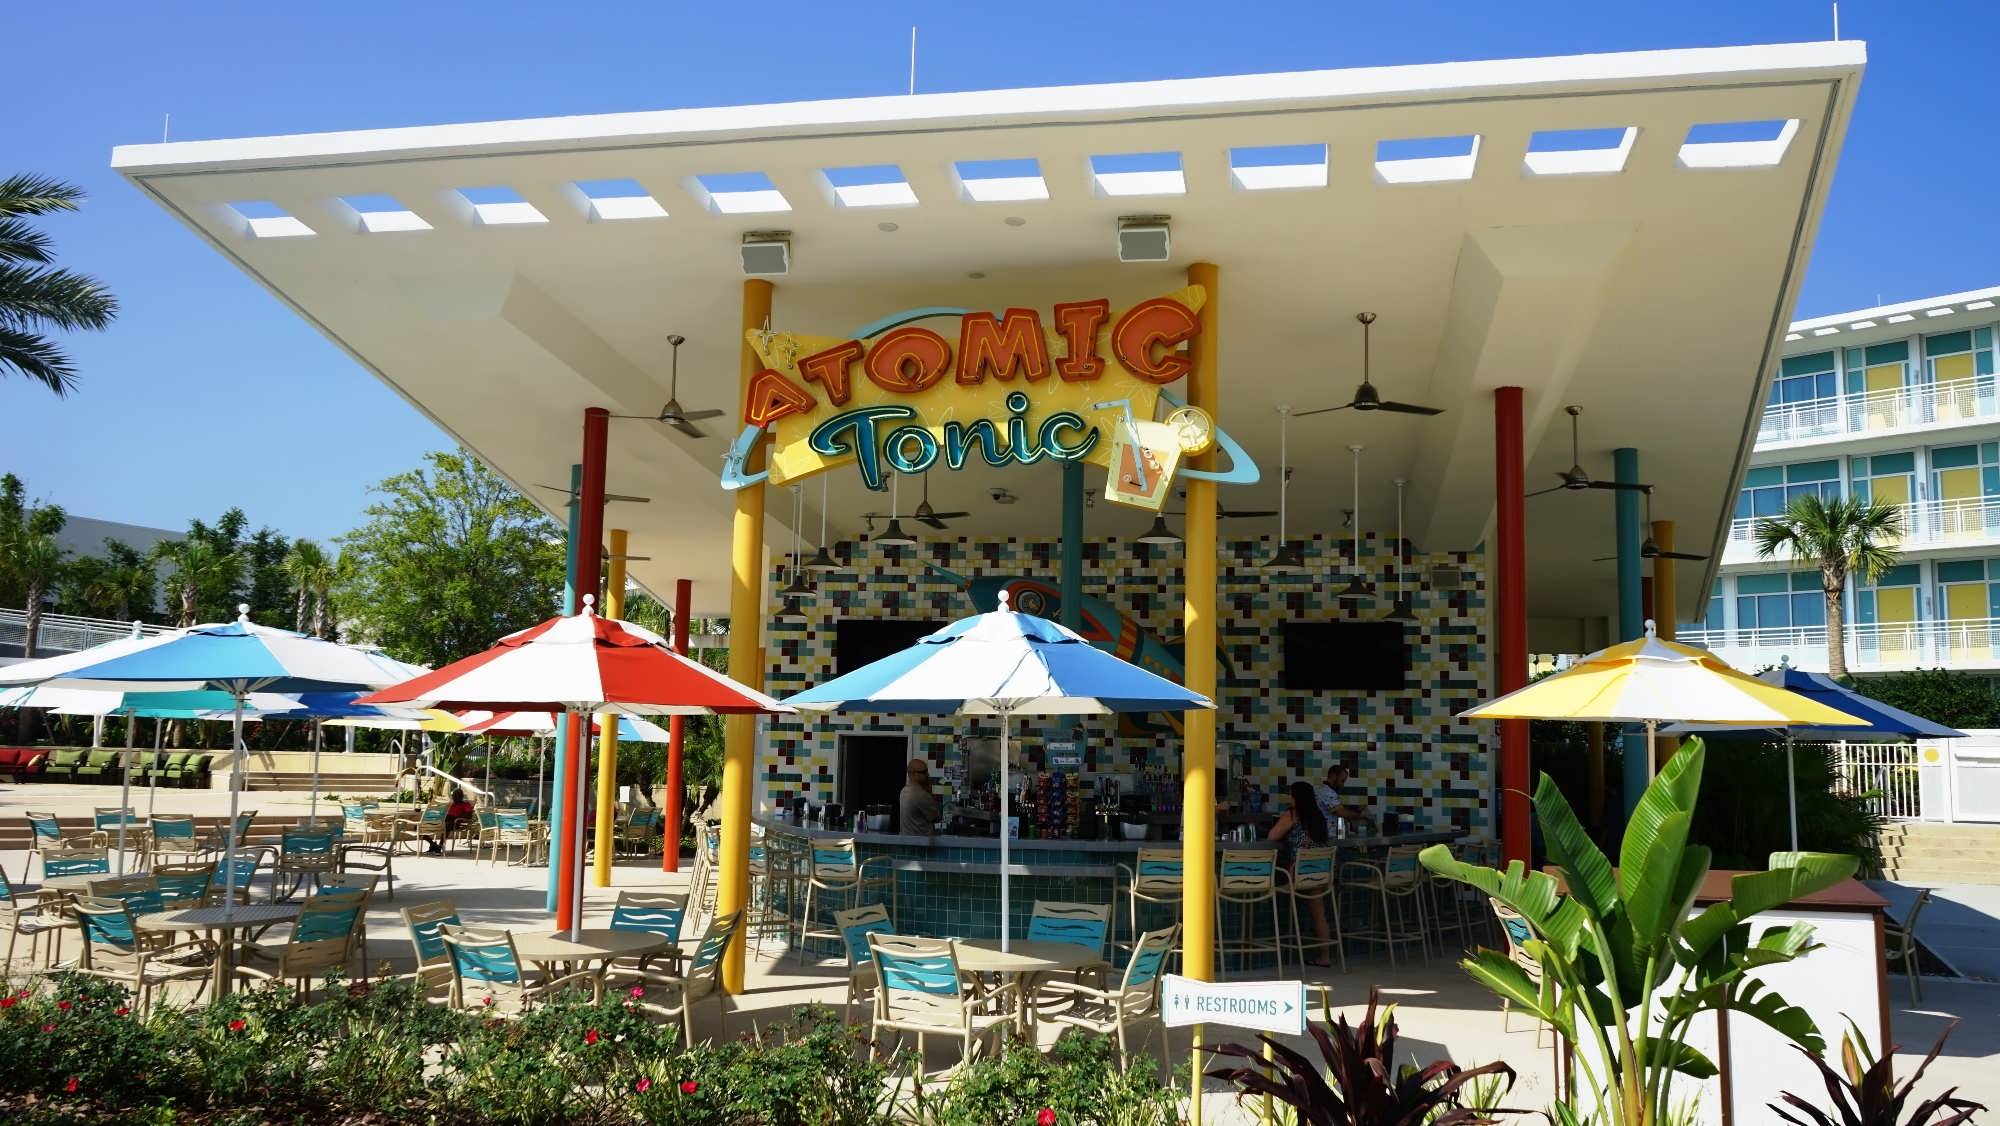 Atomic Tonic poolside bar at Cabana Bay Beach Resort